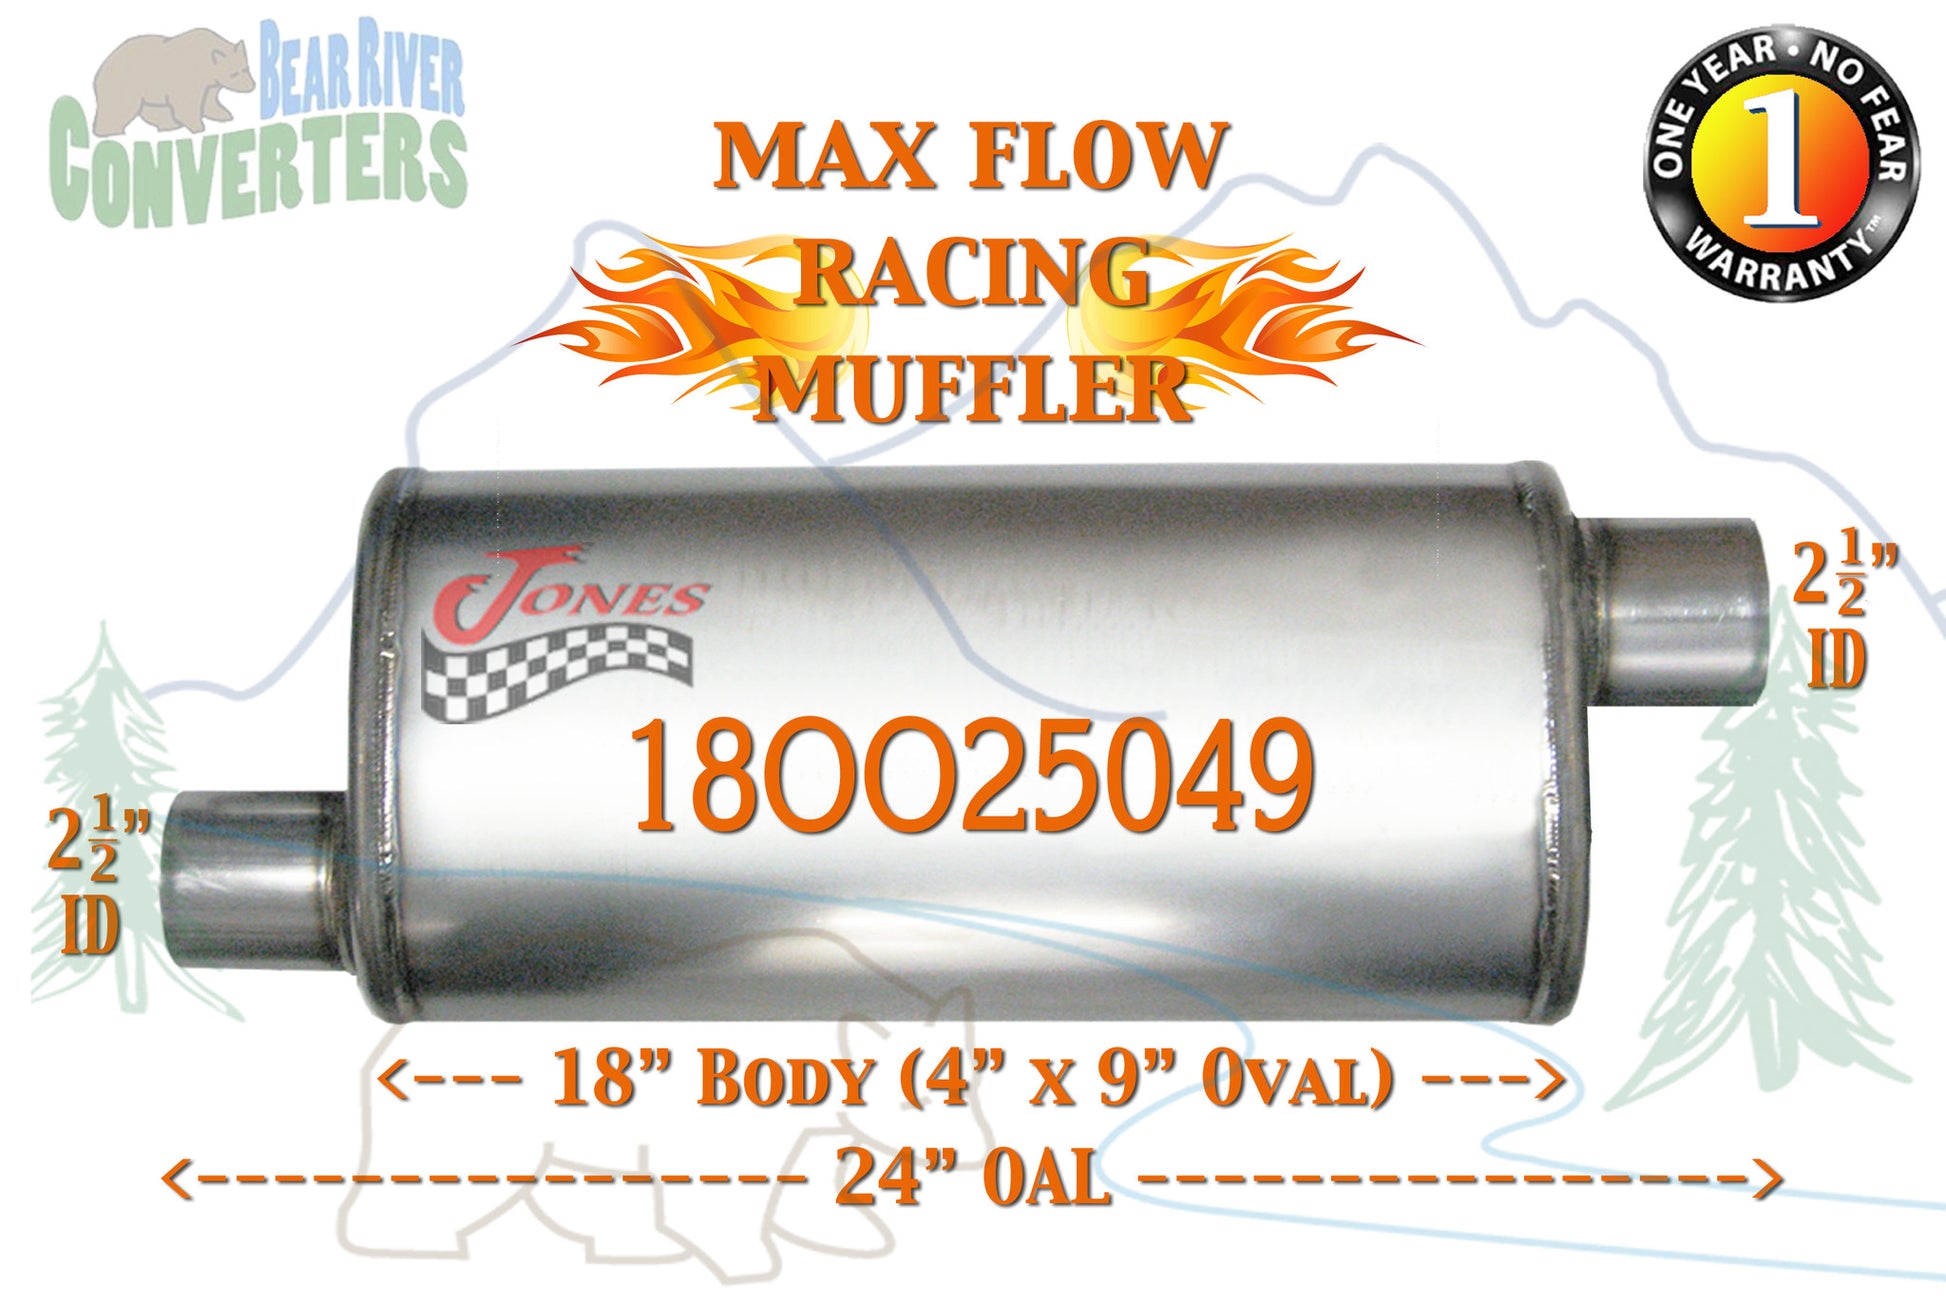 18OO25049 Jones MF1266 Max Flow Racing Muffler 18” Oval Body 2 1/2” 2.5” Pipe Offset/Offset 24” OAL - Bear River Converters